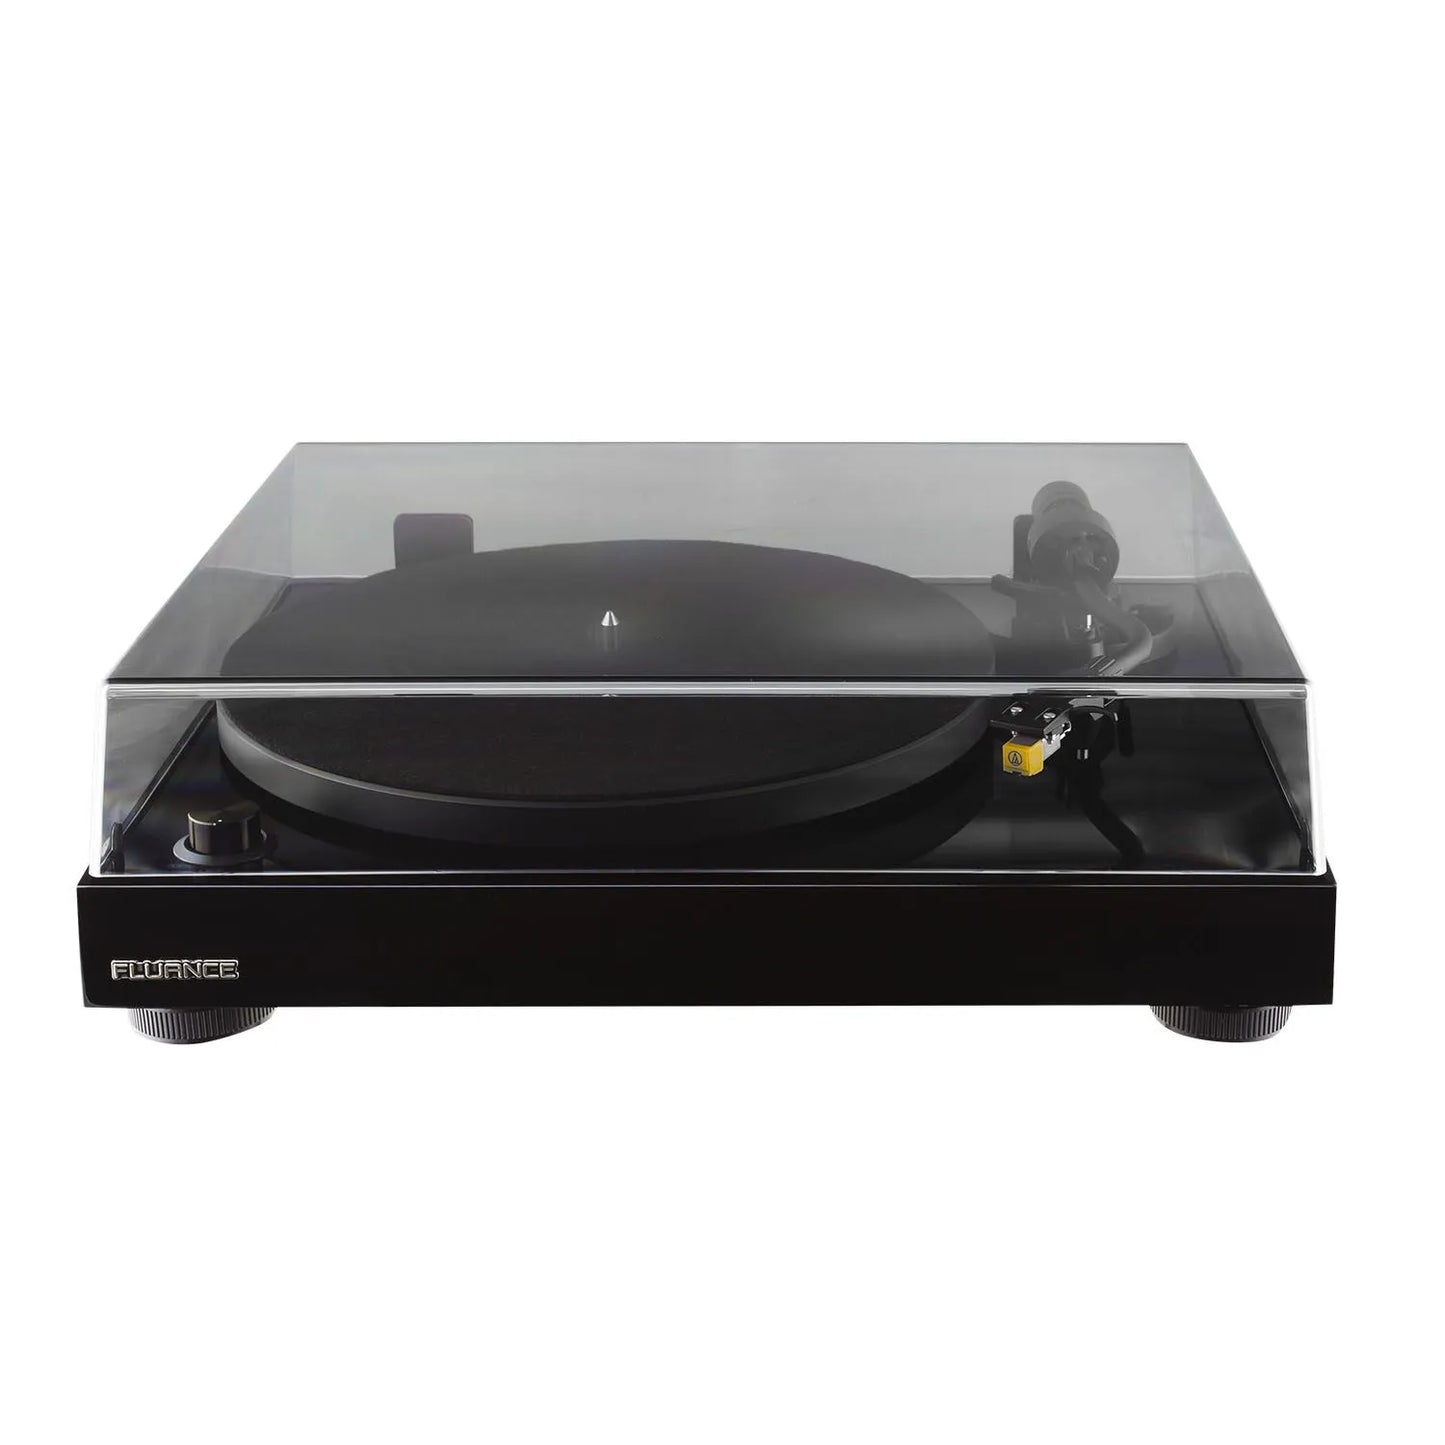 RT80 Classic High Fidelity Vinyl Turntable